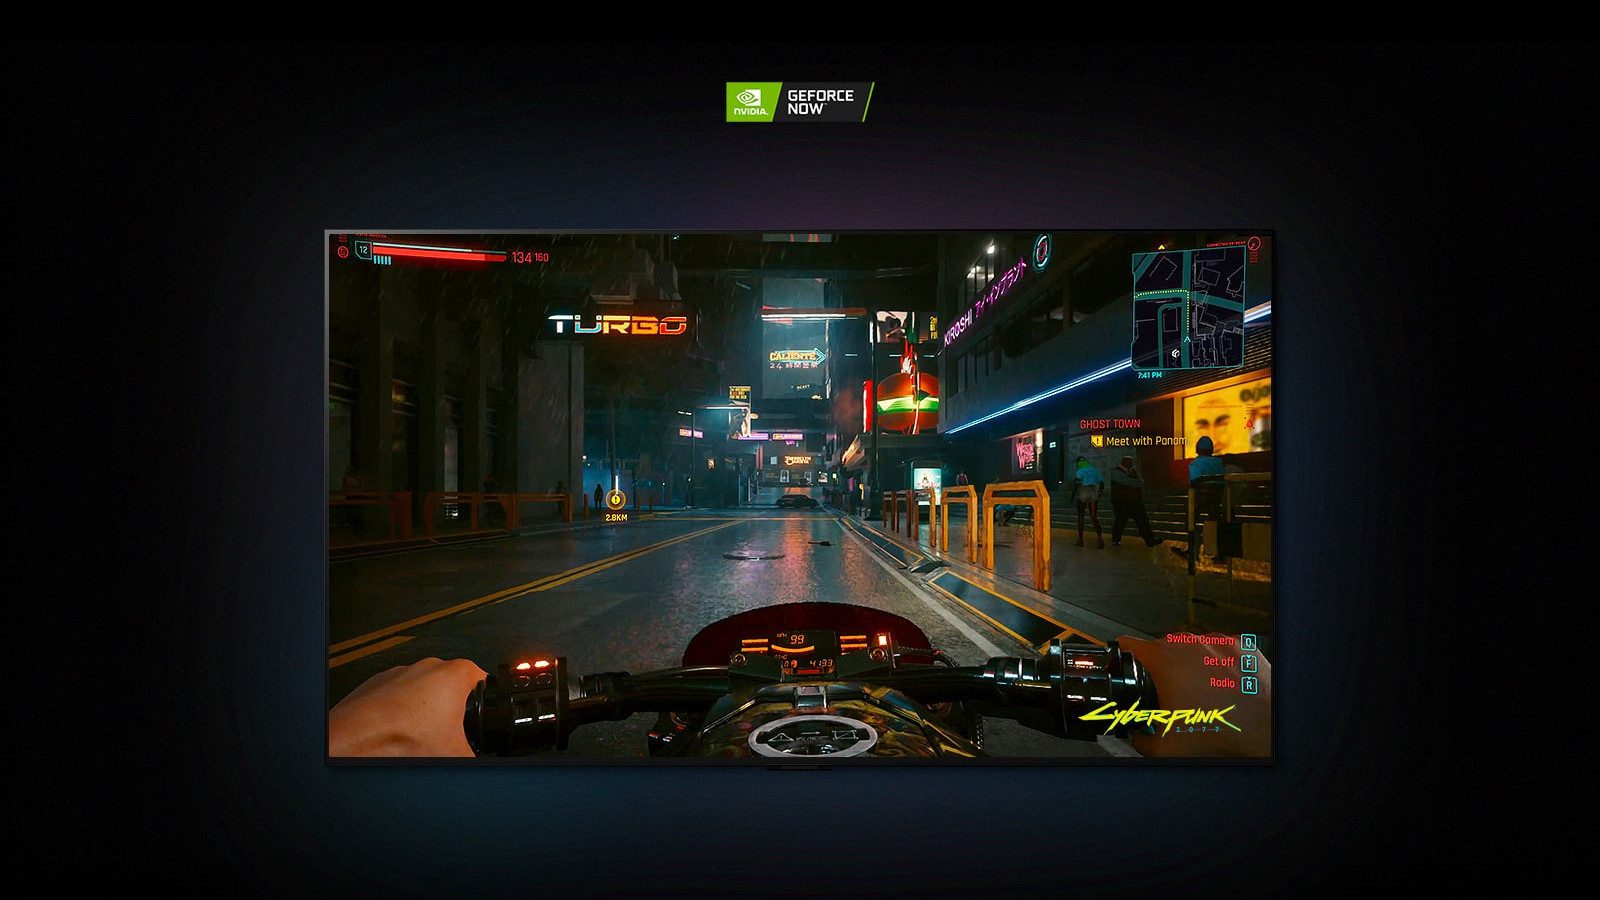 LG B2 OLED phone with a screenshot of Cyberpunk 2077 on it.